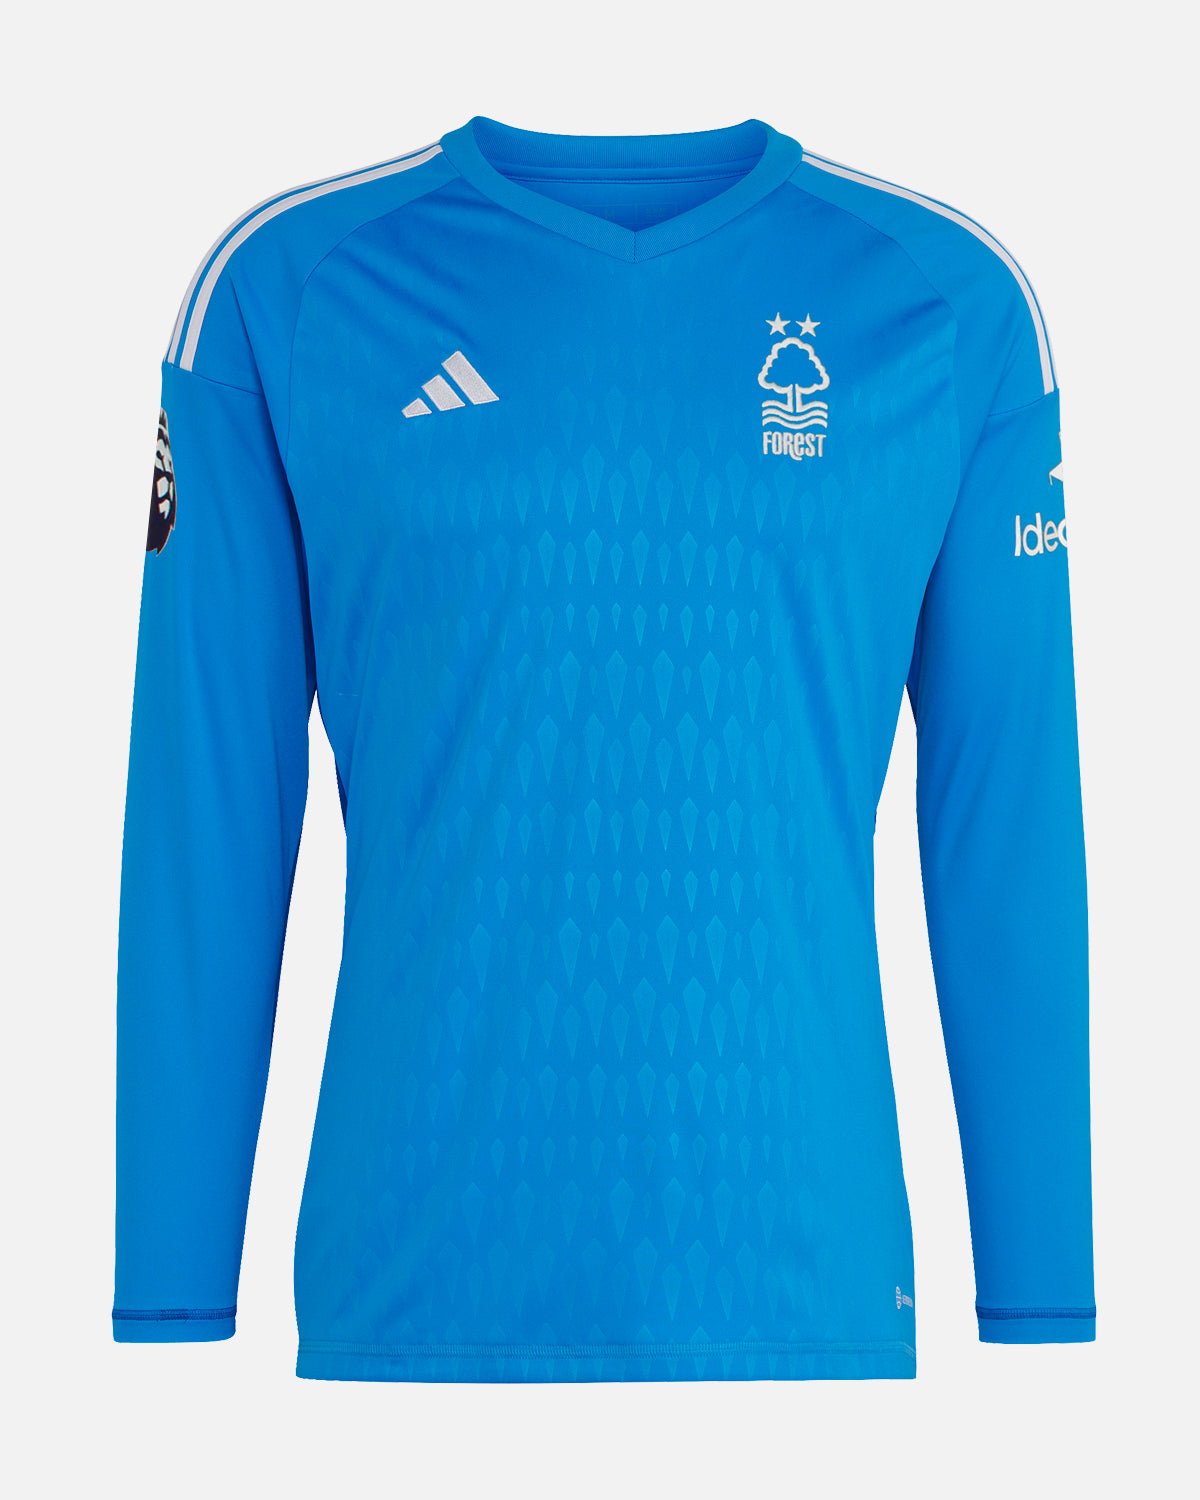 NFFC Junior Blue Goalkeeper Shirt 23-24 - Odysseas 23 - Nottingham Forest FC